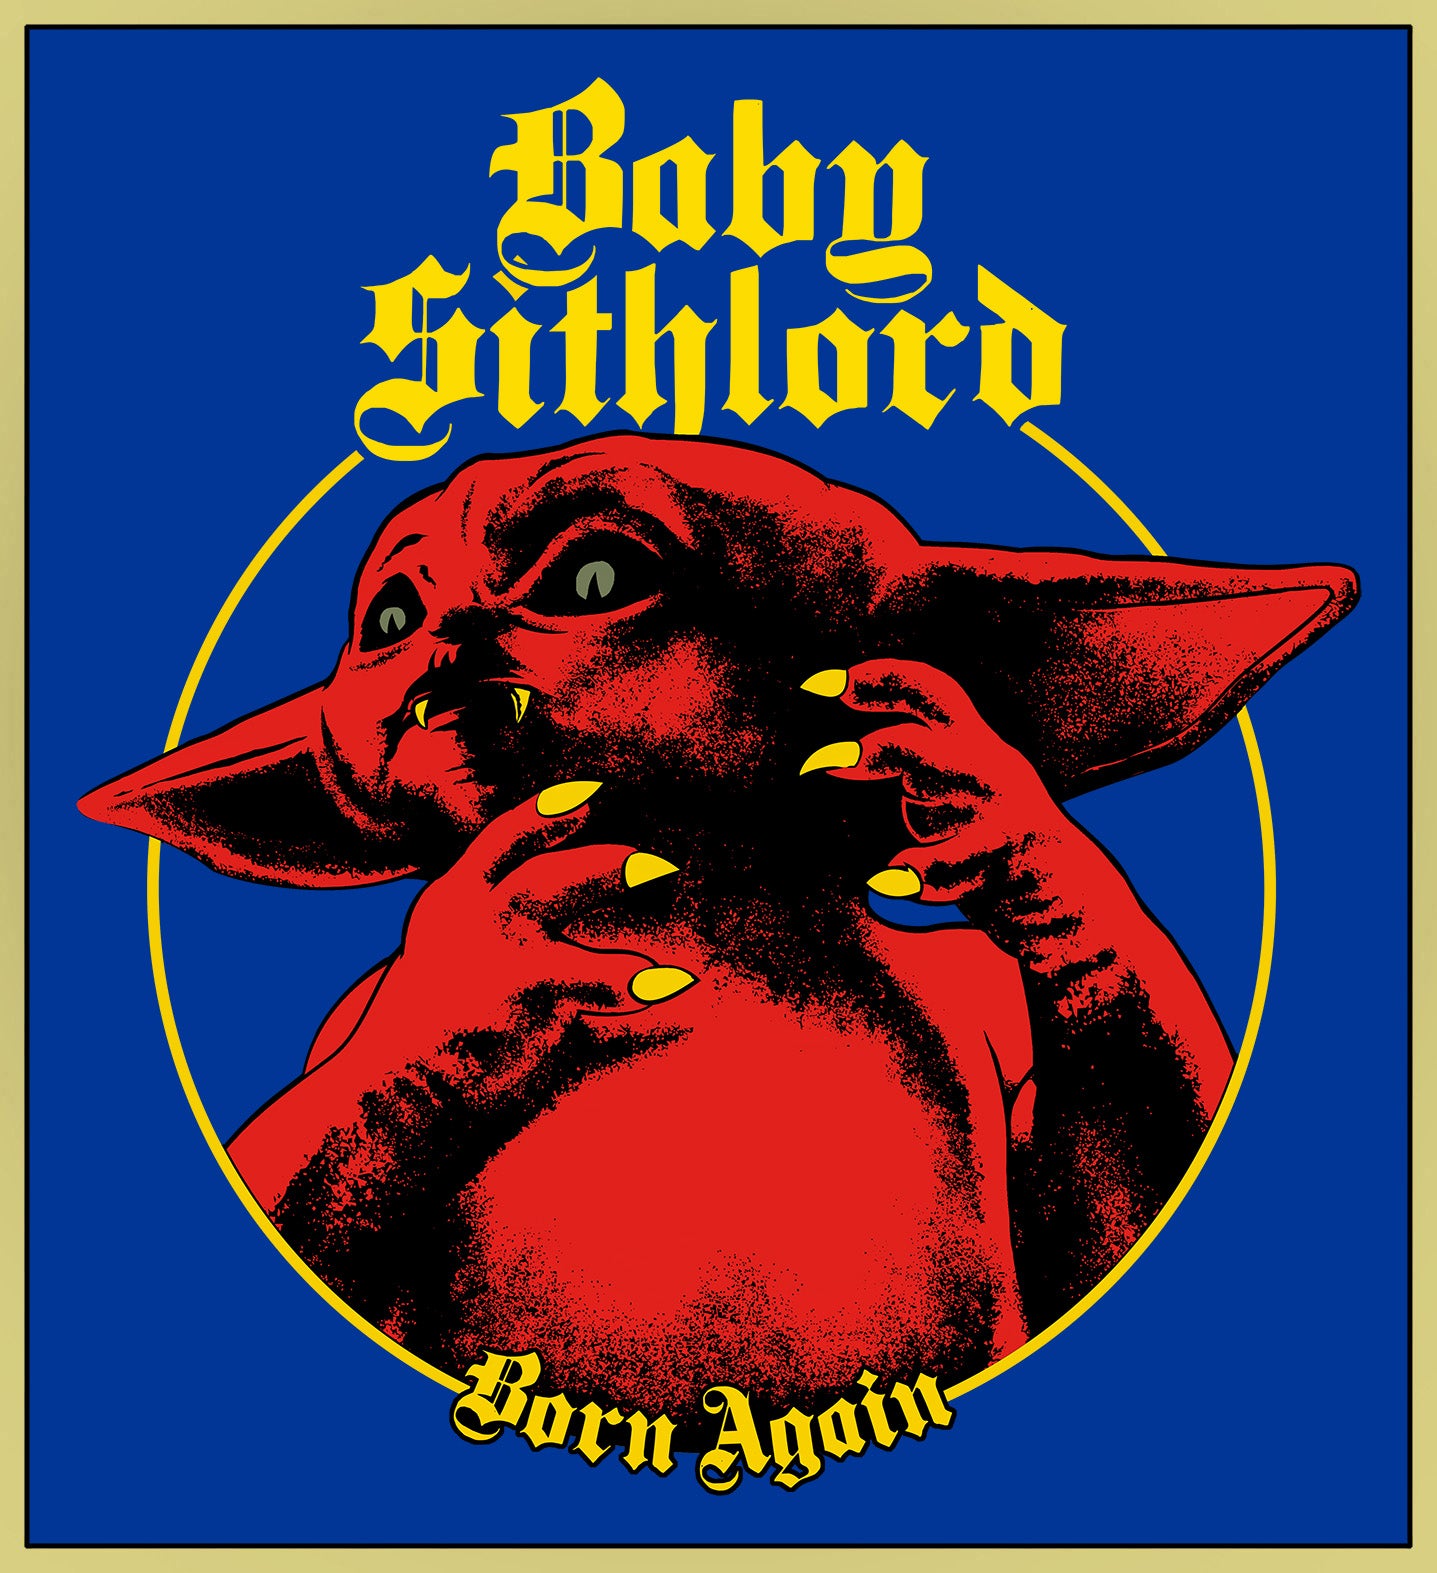 BABY SITHLORD - BLACK SABBATH / GROGU (BORN AGAIN BLUE) - HEAVY METAL TURBO TEE!